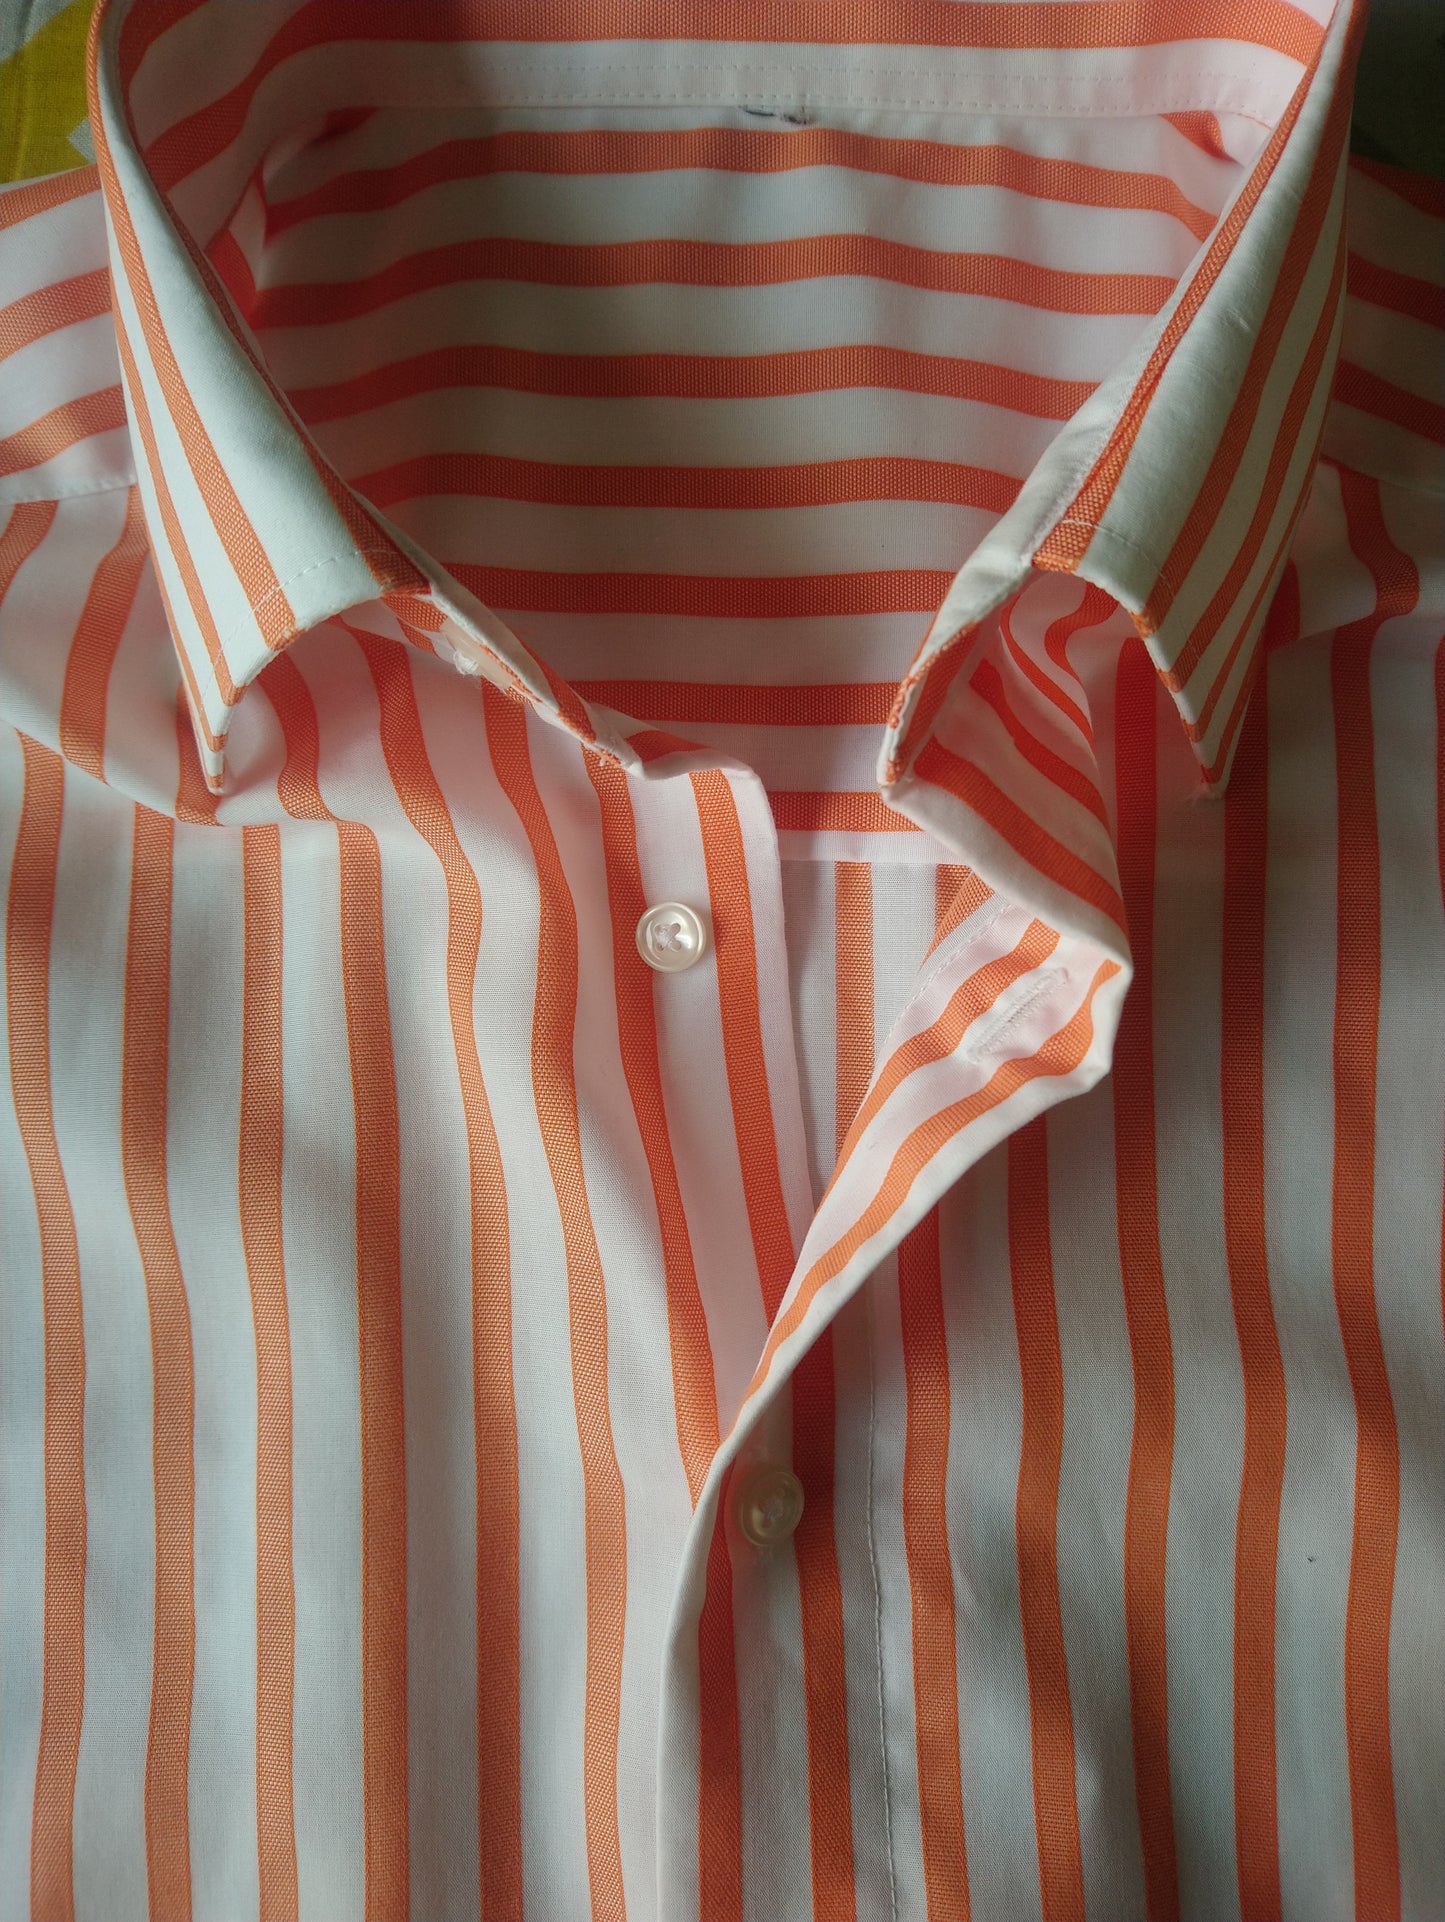 Olymp overhemd korte mouw. Oranje Wit gestreept. Maat XL.